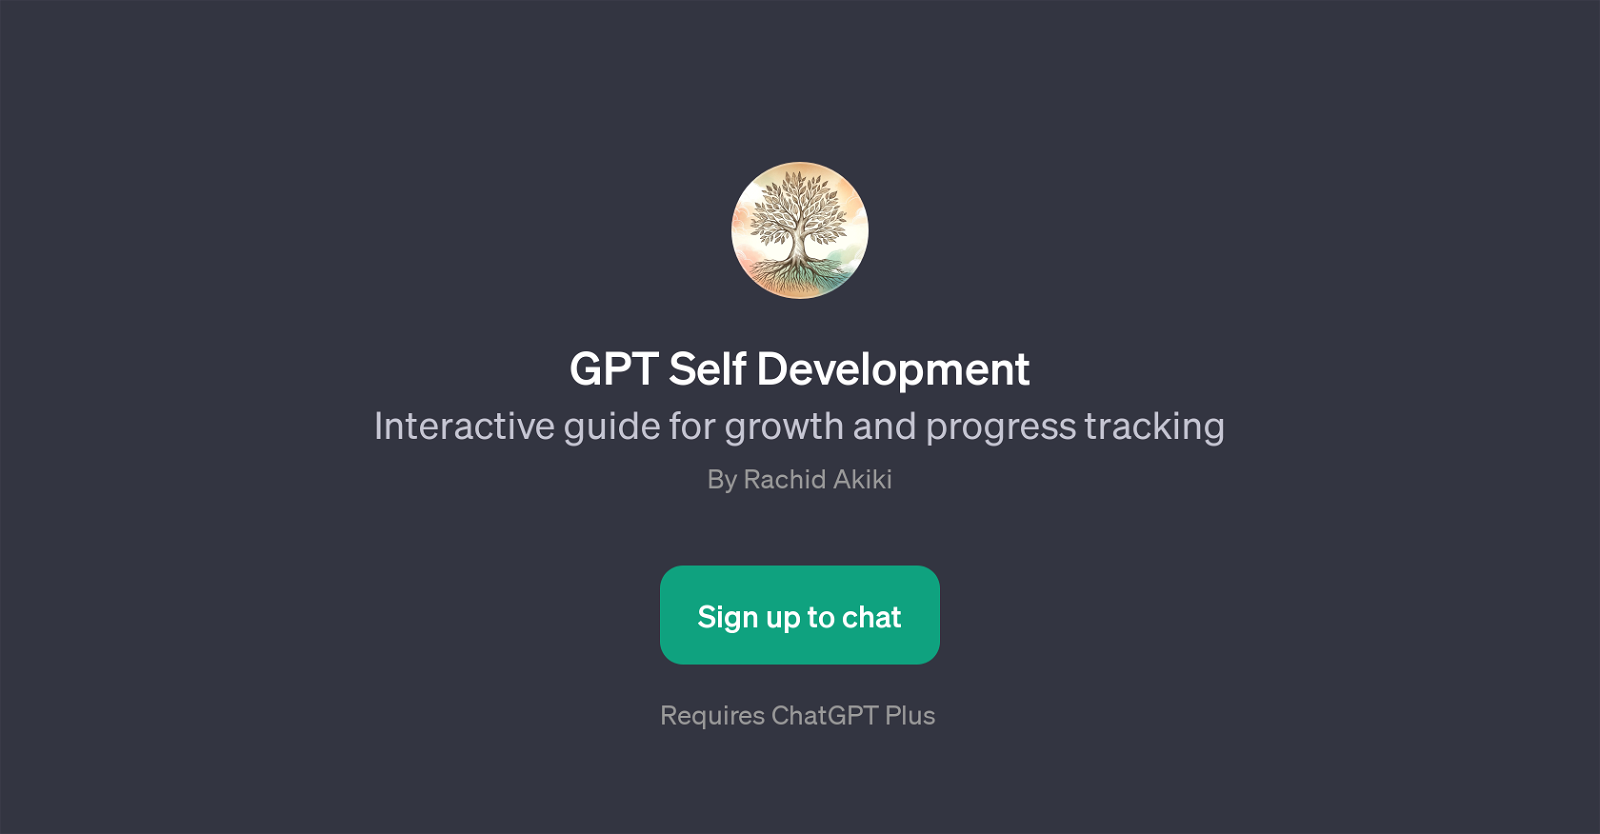 GPT Self Development website